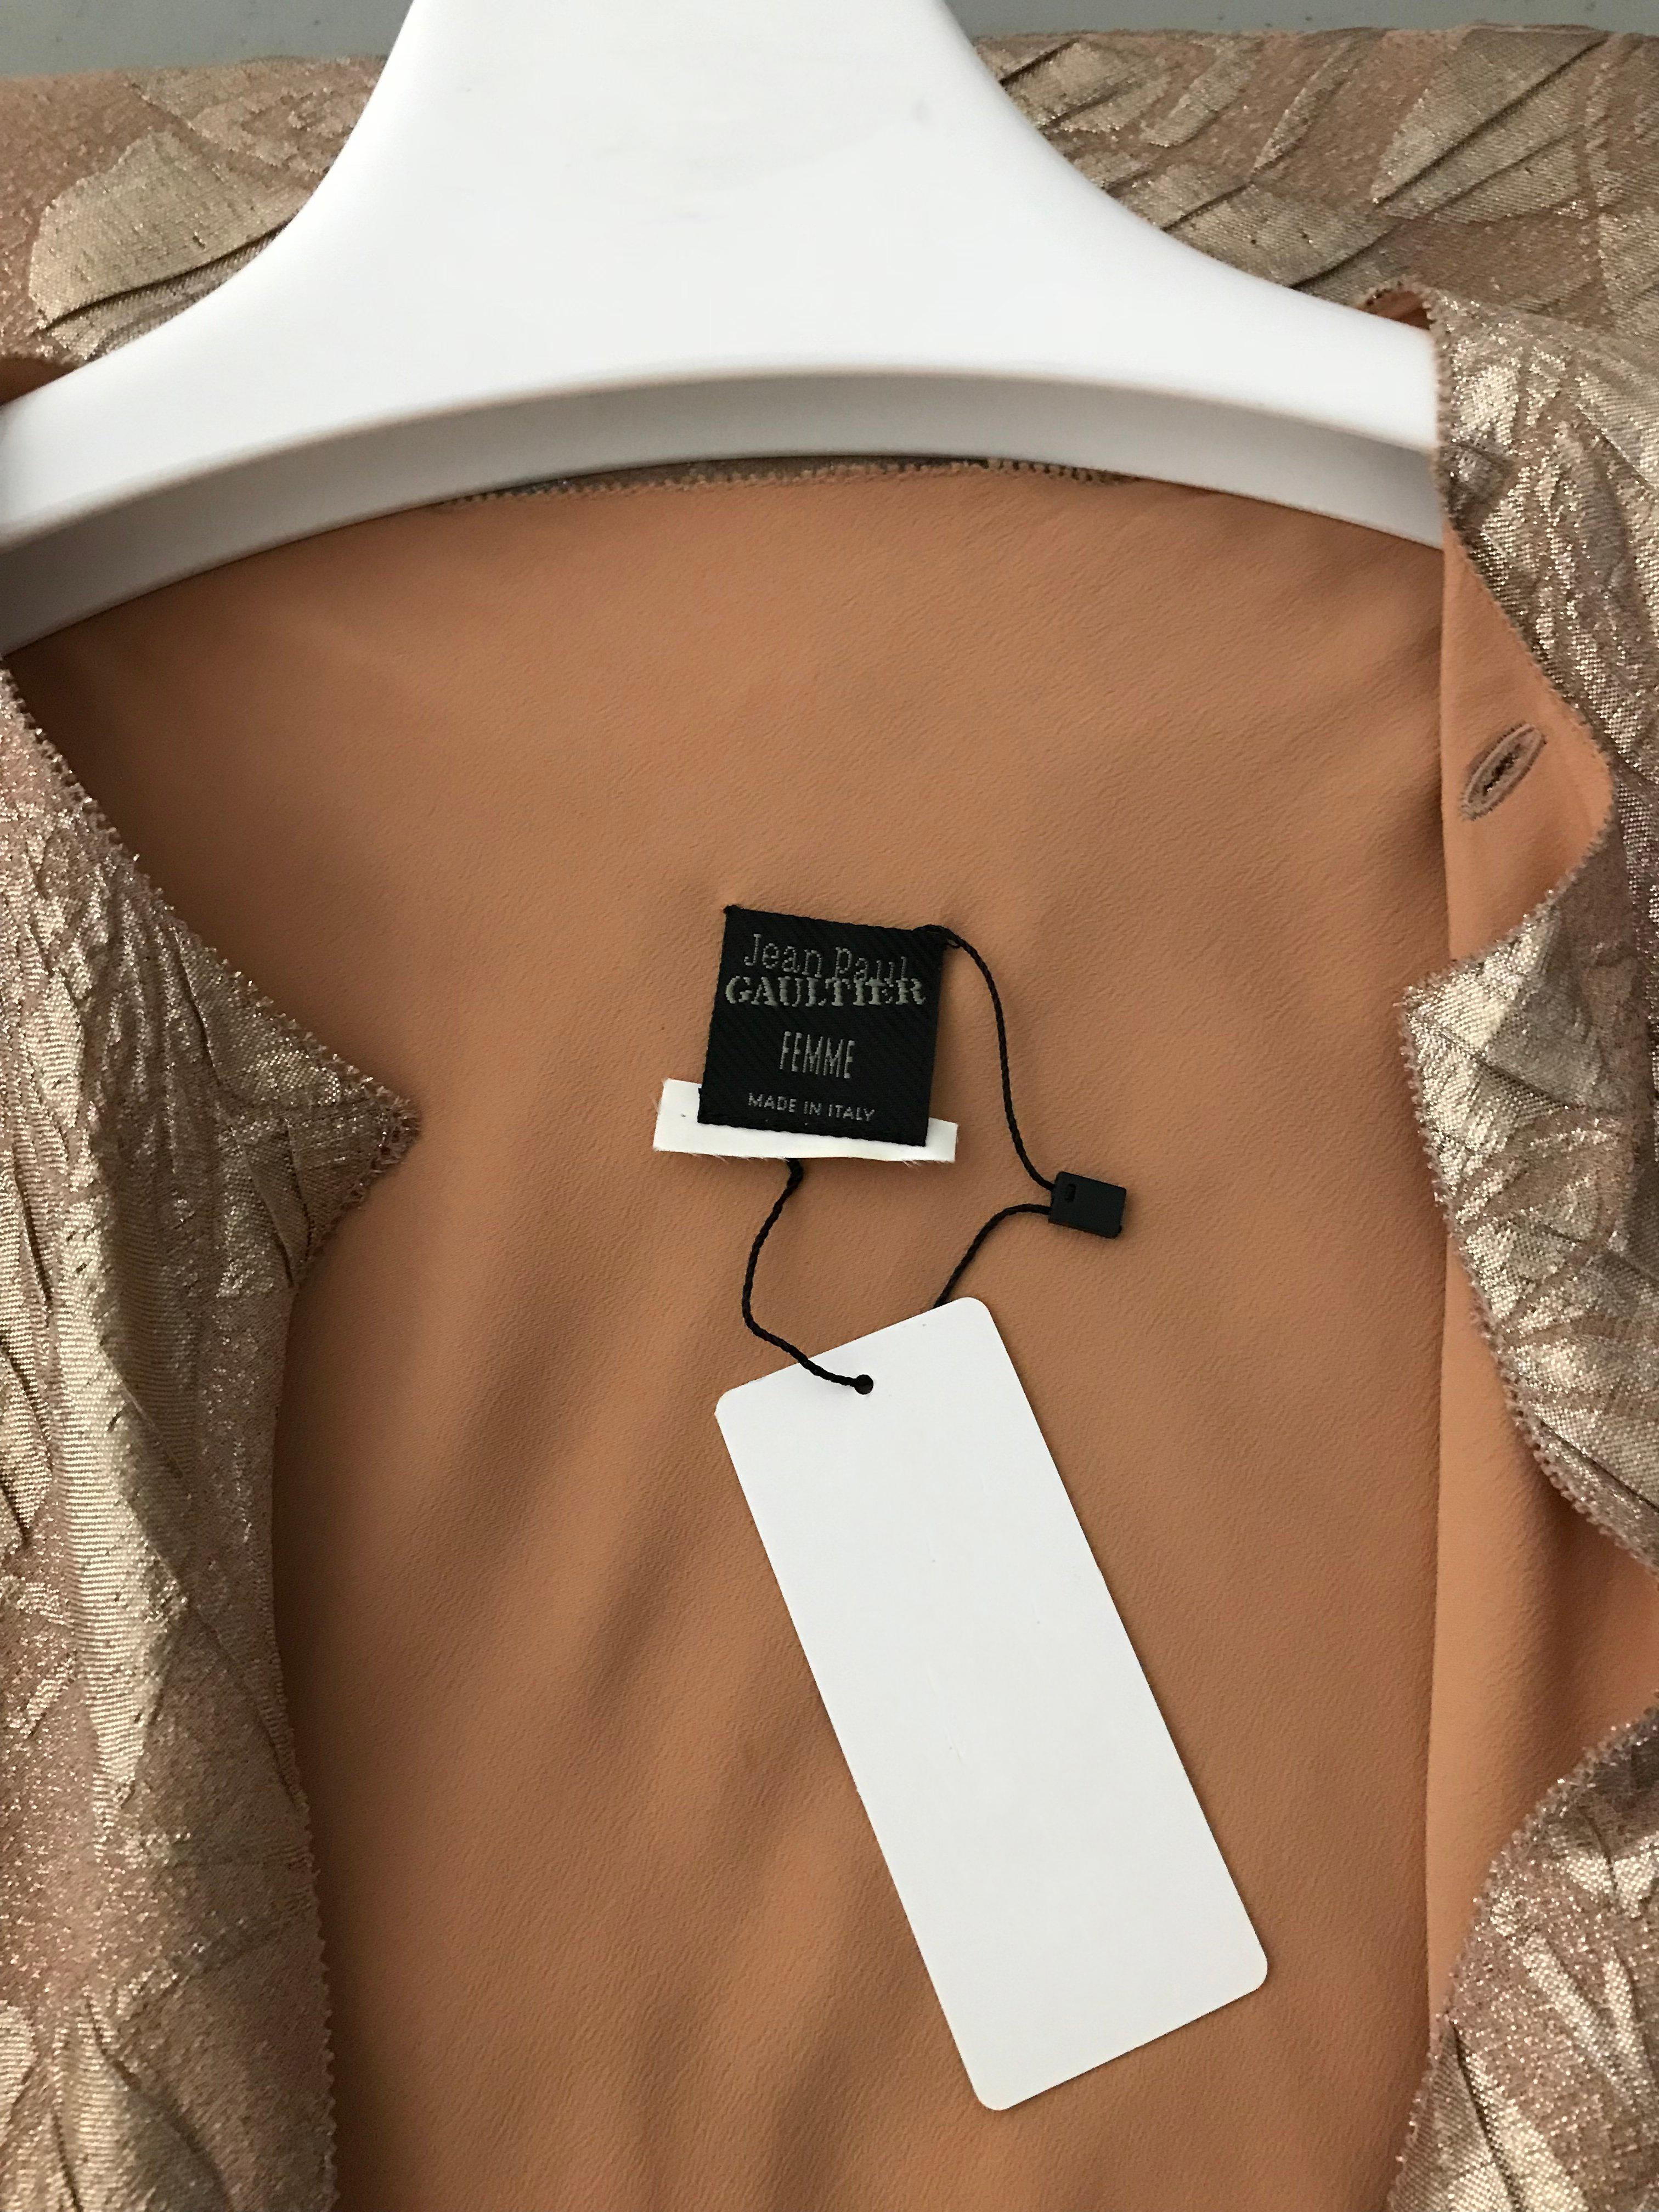 Jean Paul Gaultier Metallic Silk Jacquard  Dress with Jacket  For Sale 4